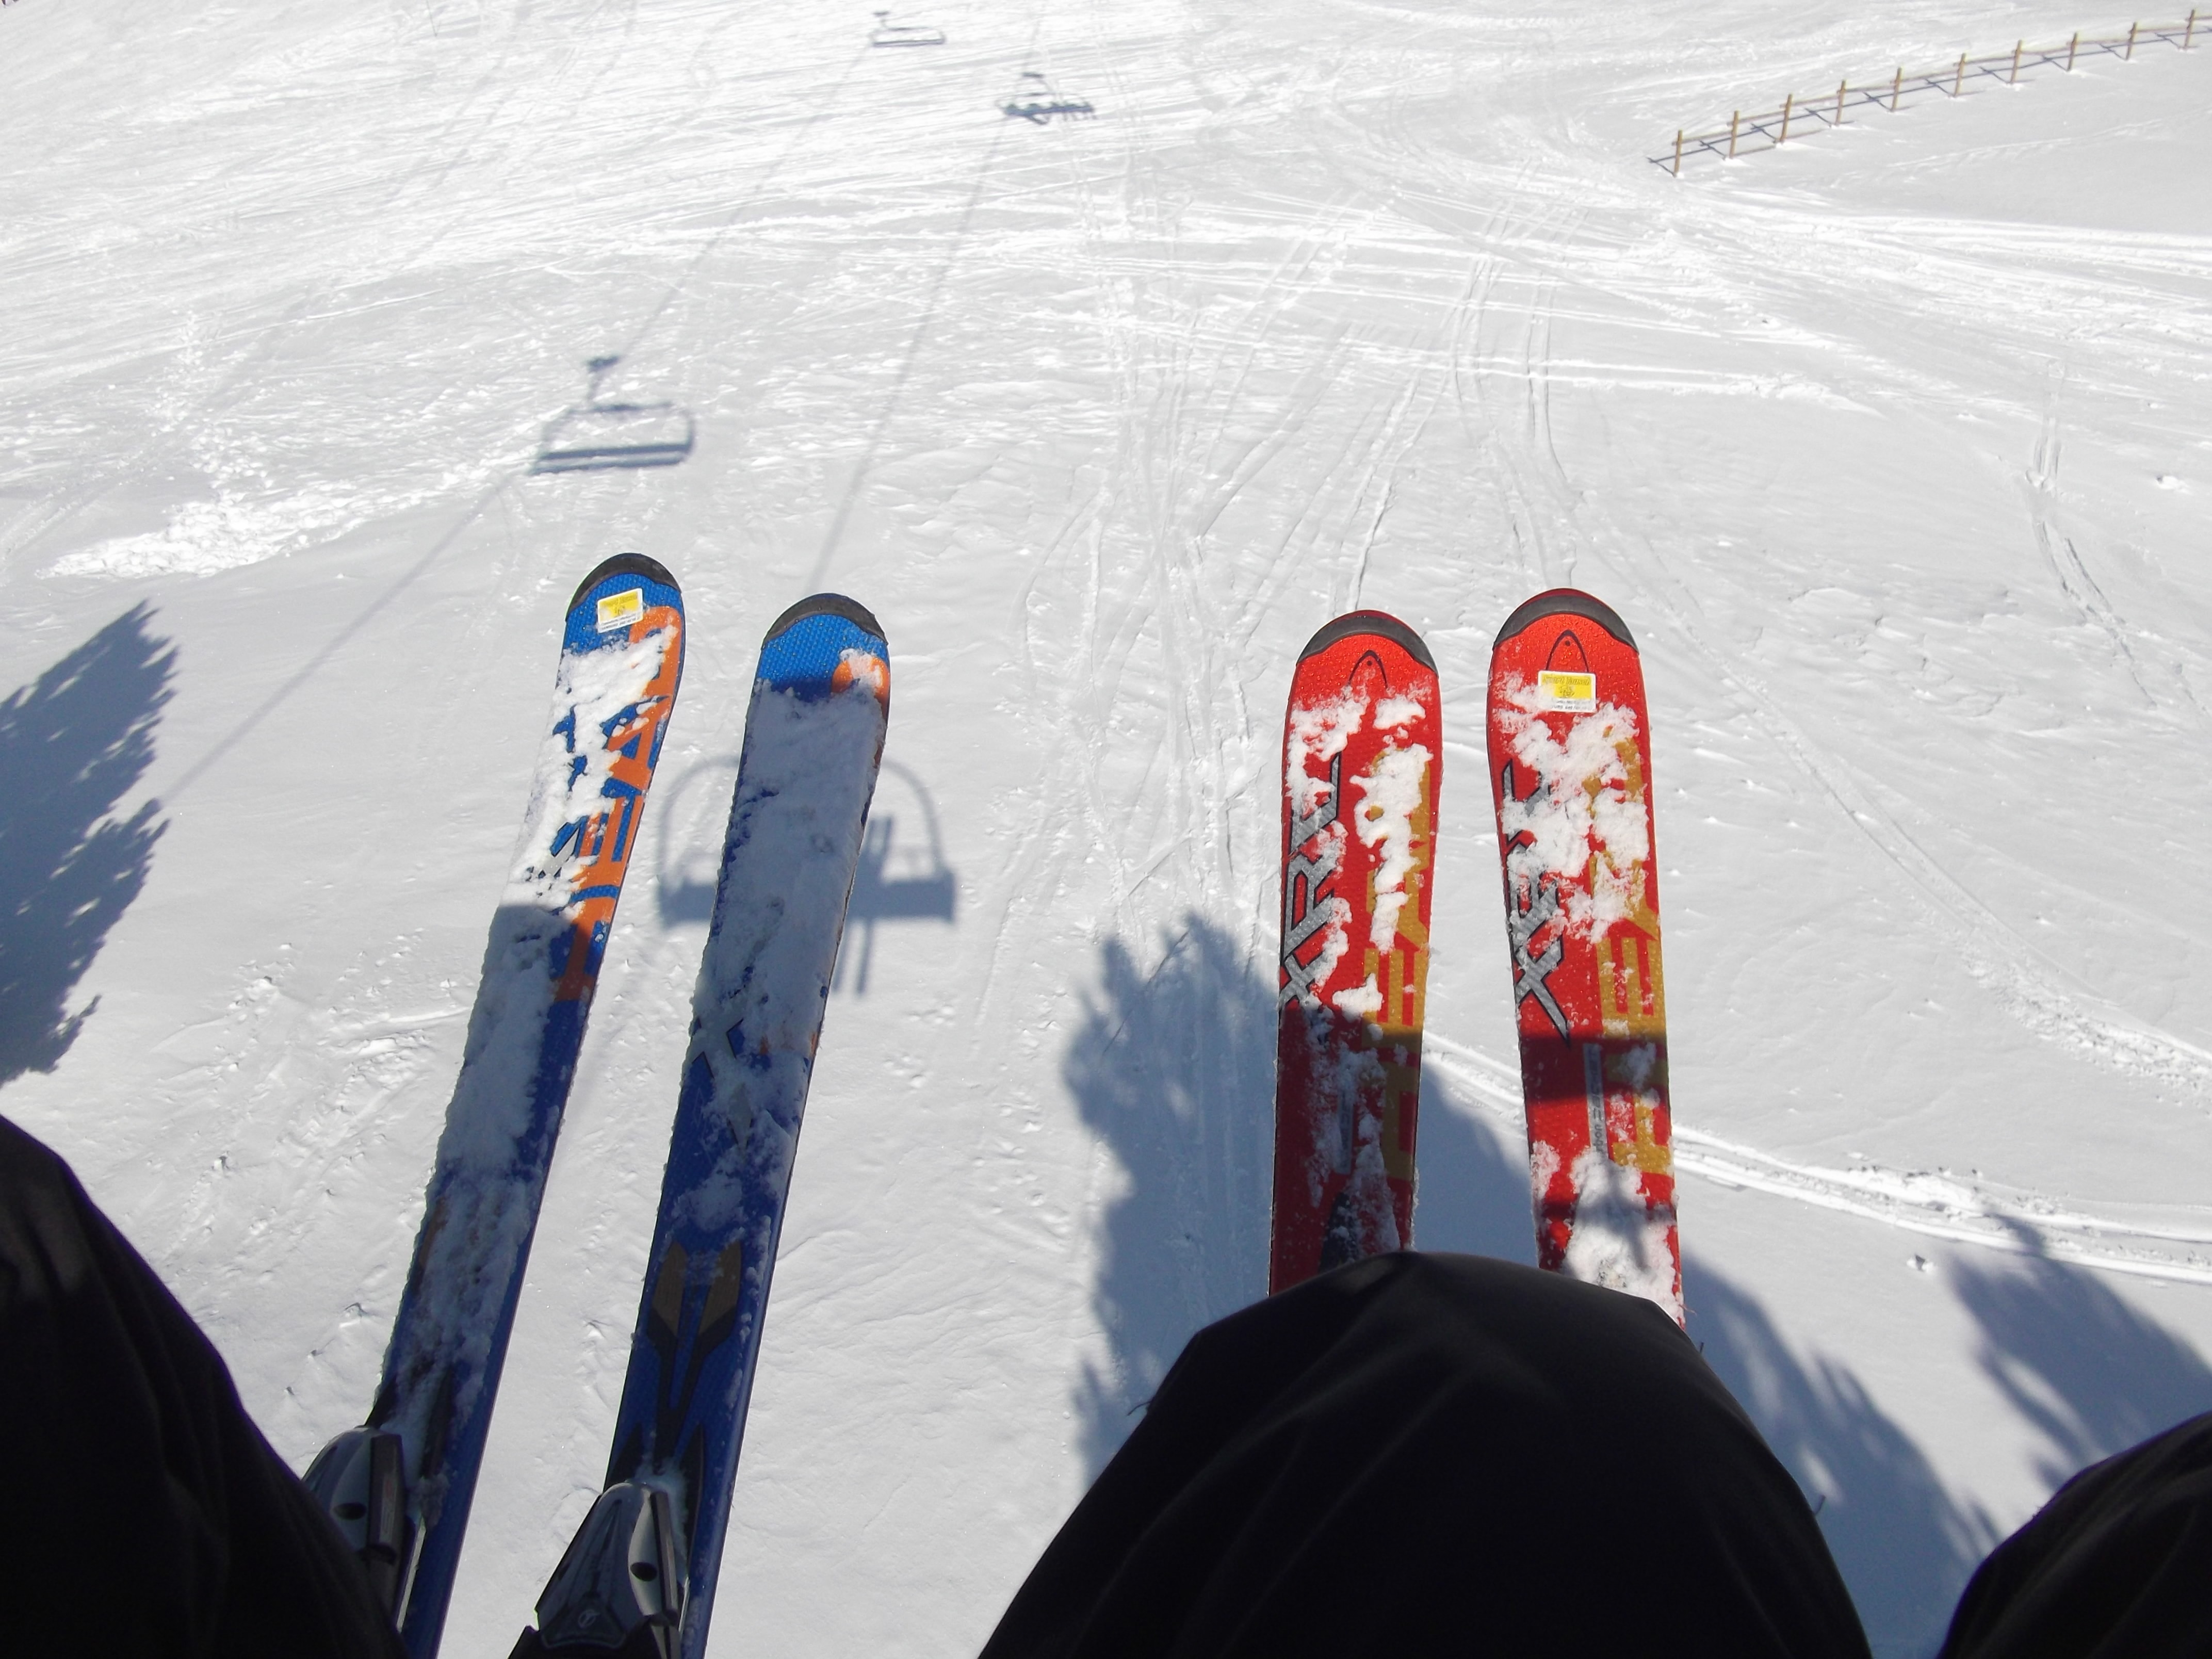 Lifts, Skis, Ski Lift, Ski, Skiing, snow, winter